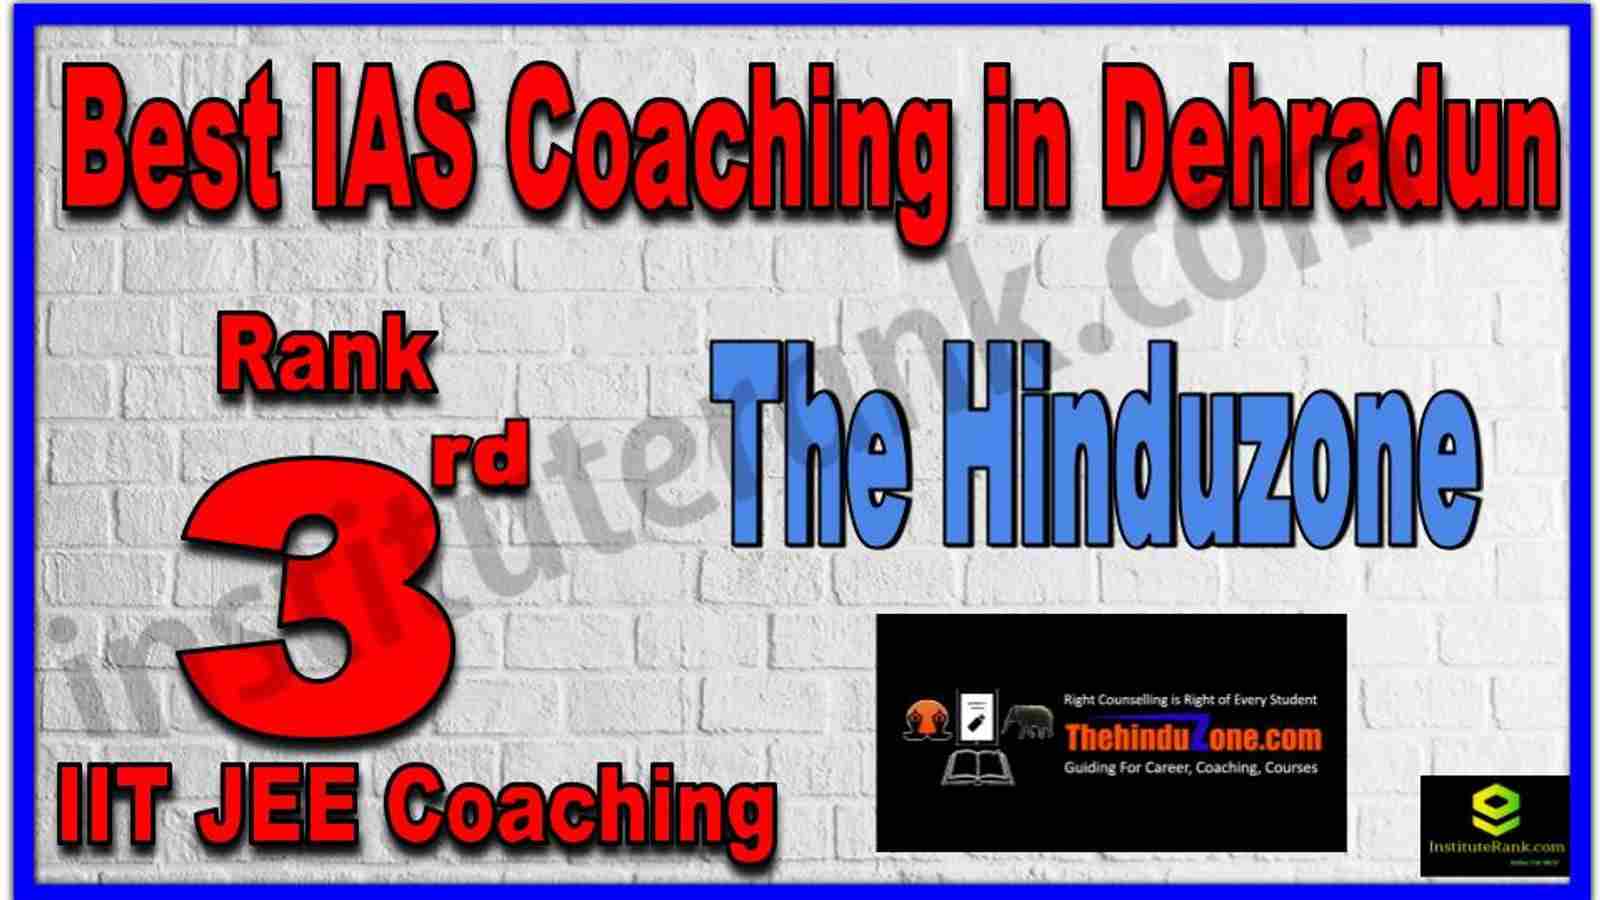 Rank 3rd Best IAS Coaching in Dehradun